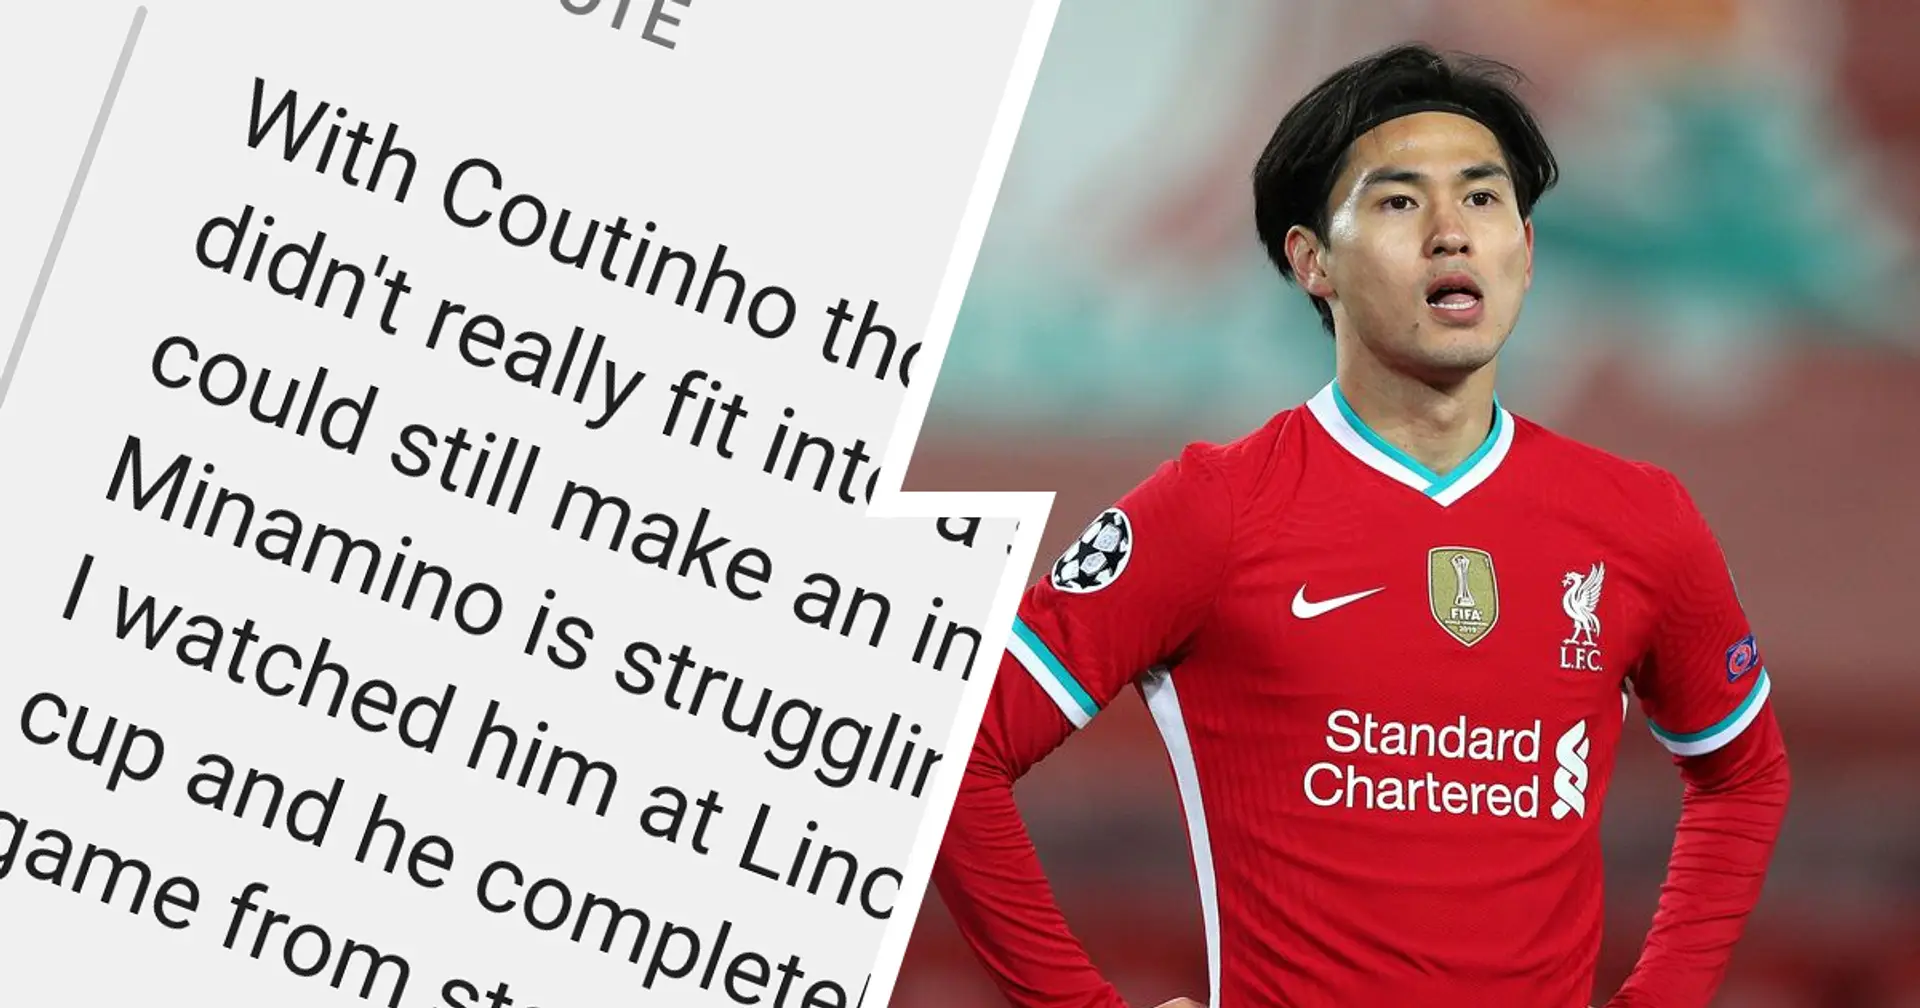 Liverpool fan makes Coutinho comparison elaborating on Minamino's struggles